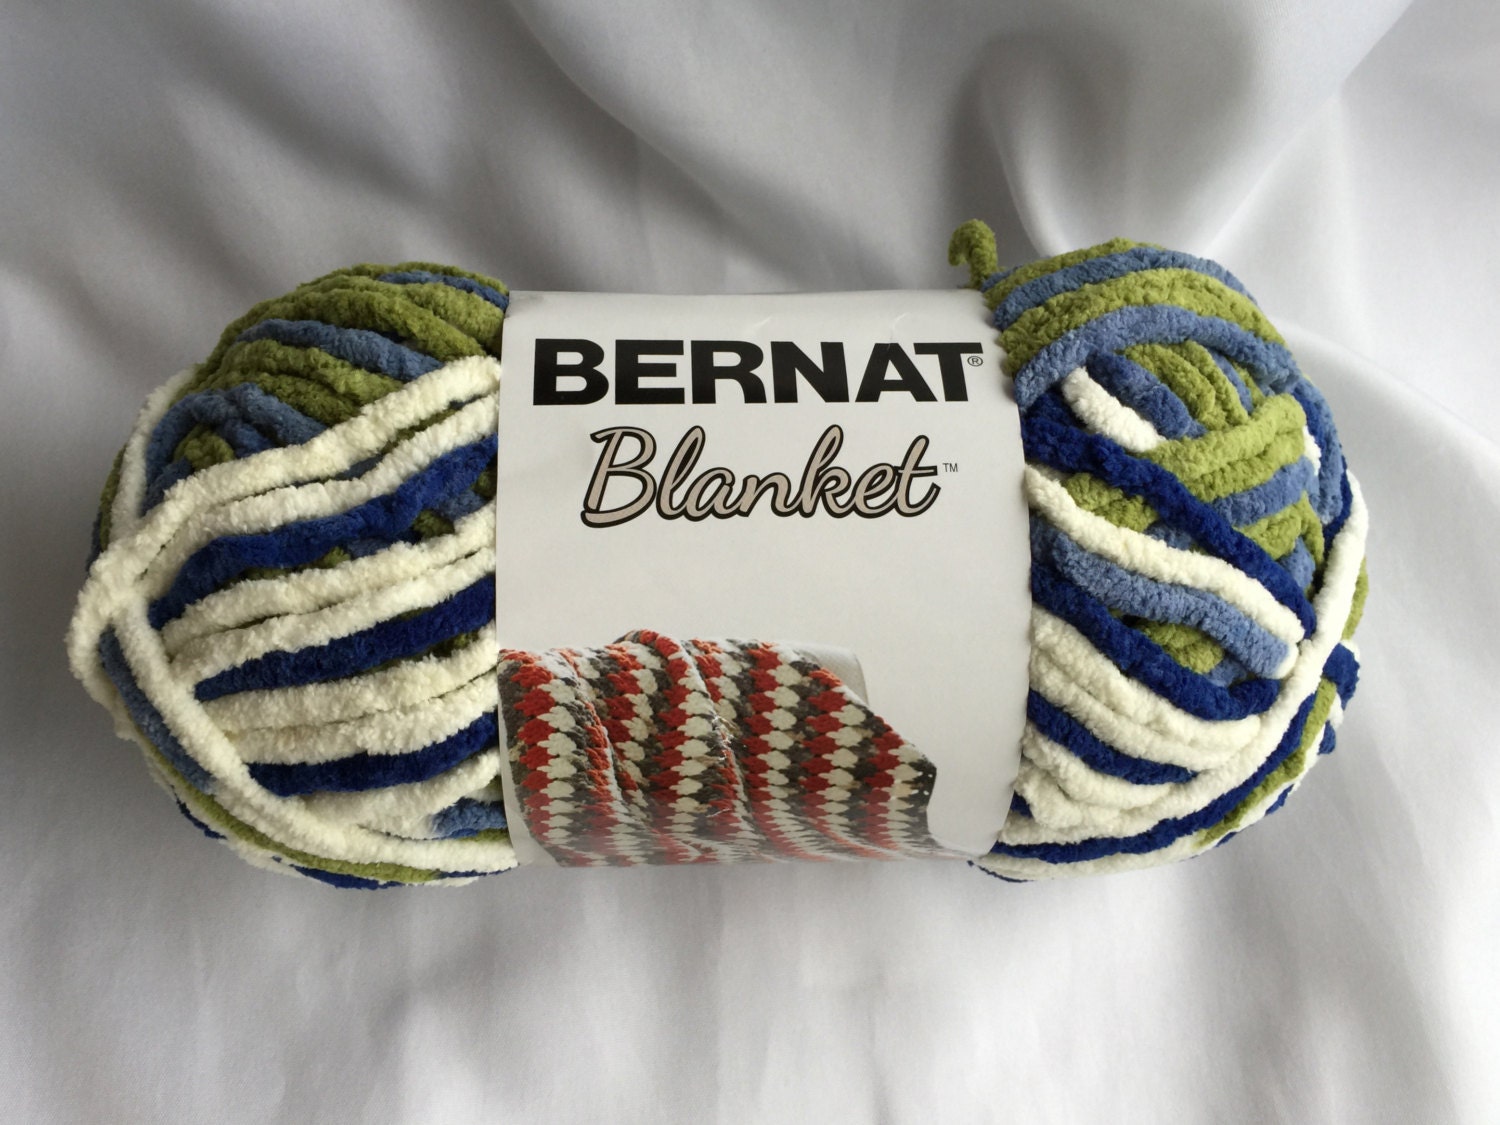  Bernat Yarn Blanket Extra Blanket Yarn, Jumbo Gauge #7, 2-Pack  (Softened Blue)